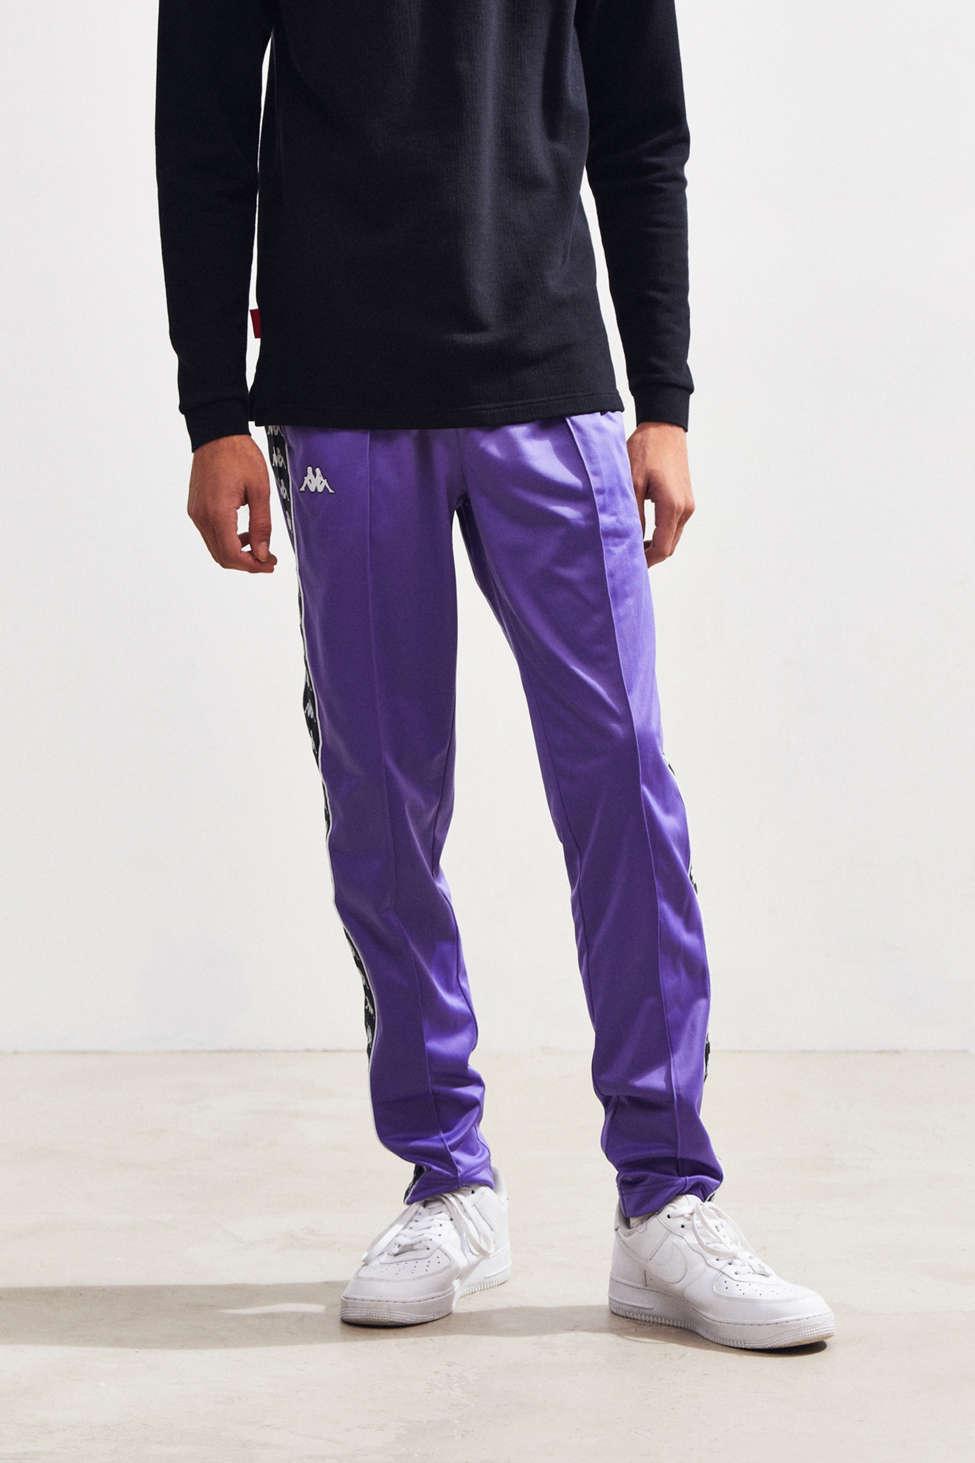 greb indsigelse anker Kappa Synthetic Banda Astoria Slim Track Pant in Purple for Men - Lyst